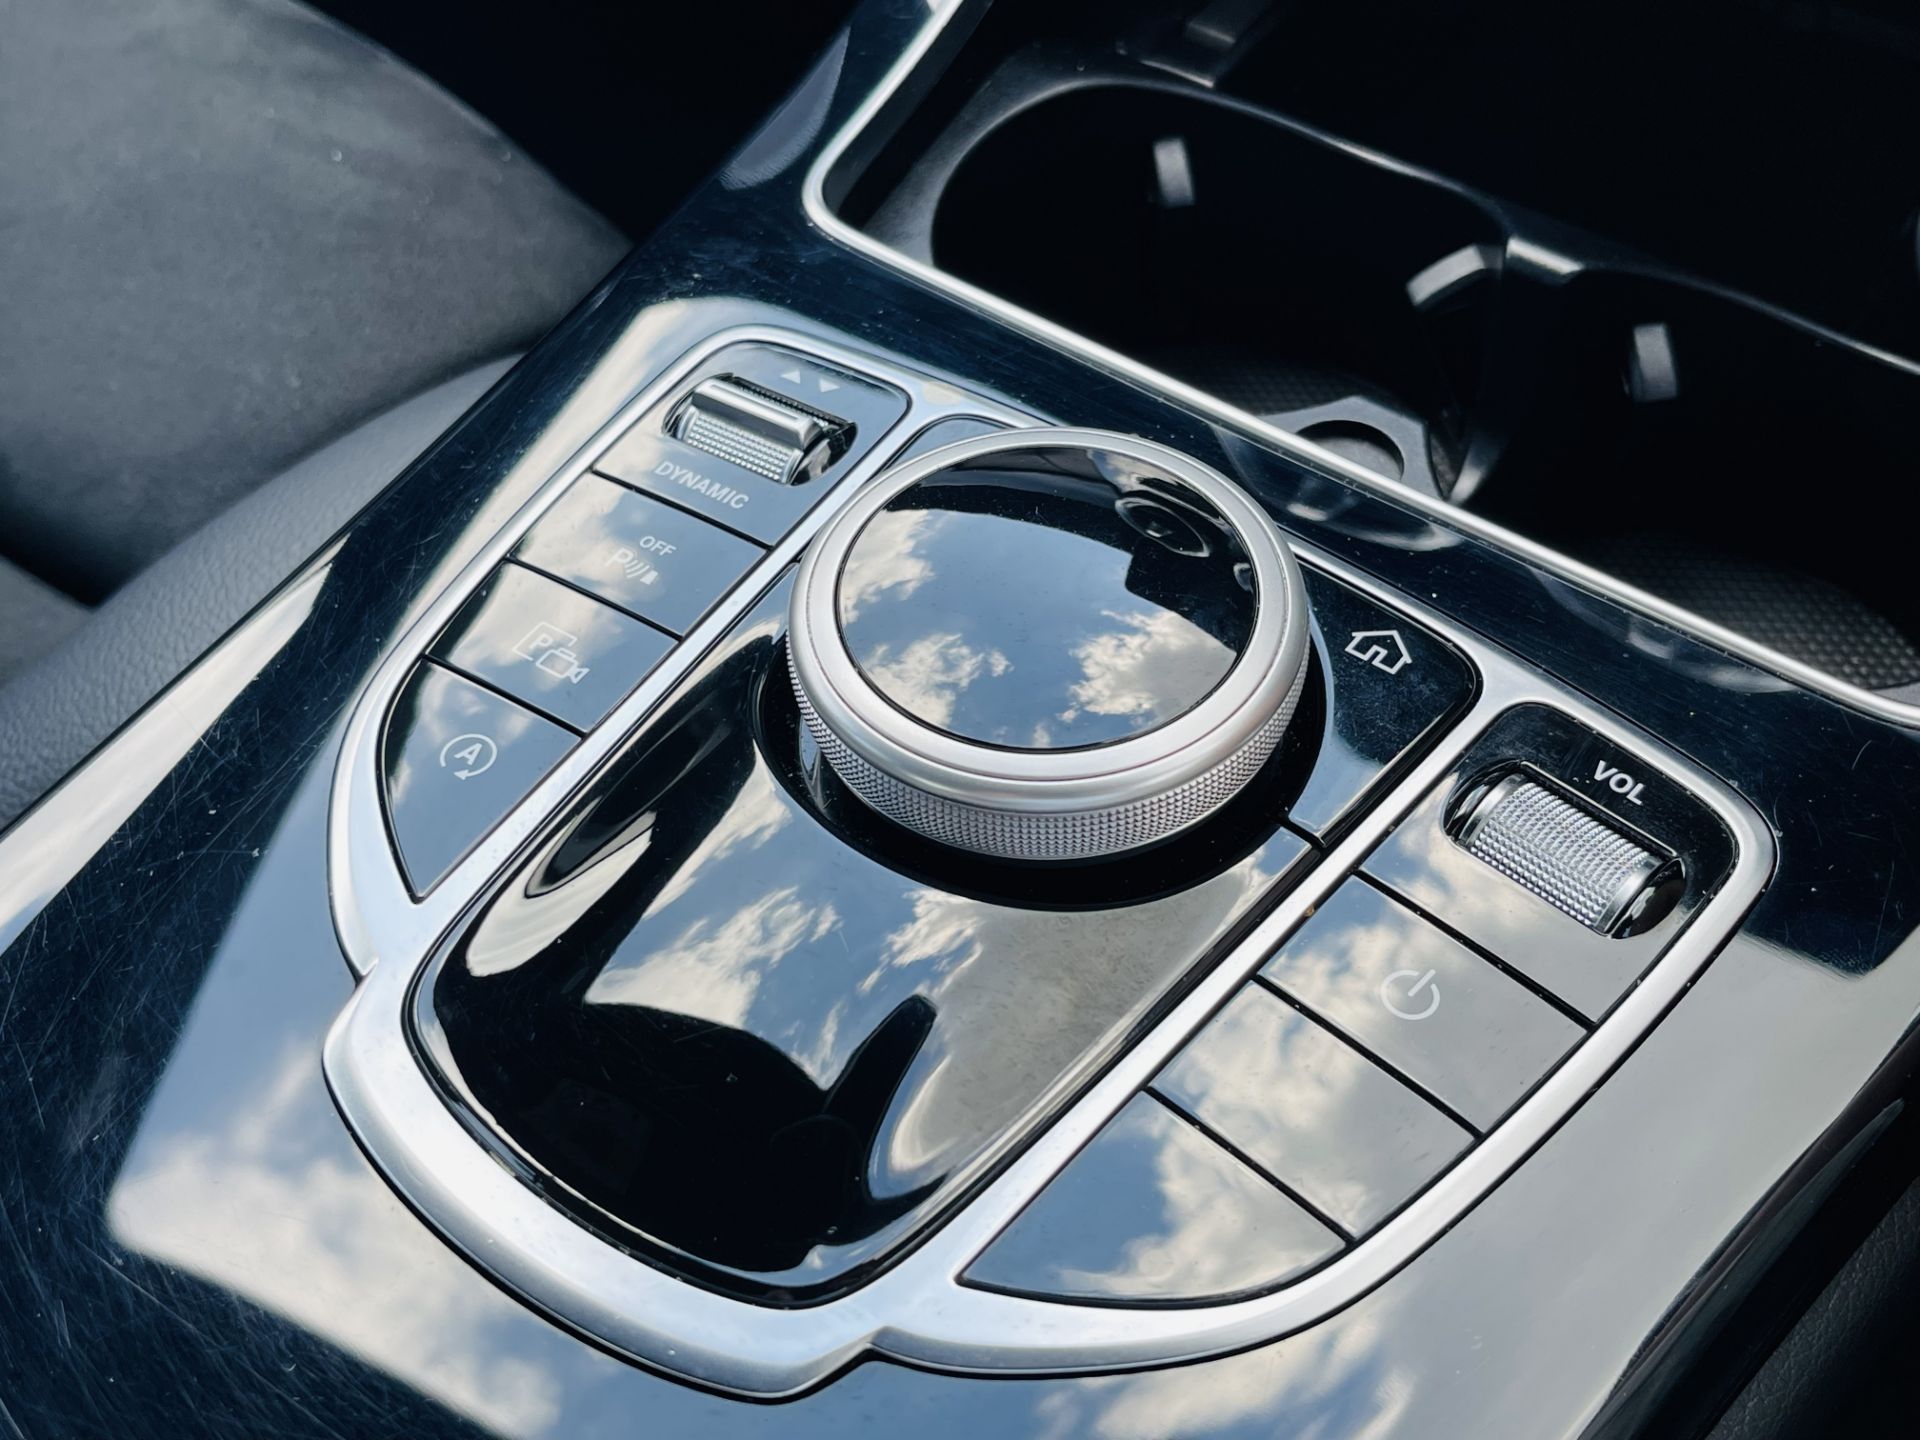 Mercedes Benz C220 AMG Line 9G-Tronic Auto 2019 ‘69 Reg’ - Sat Nav - A/C - Euro 6 - ULEZ Compliant - Image 26 of 30